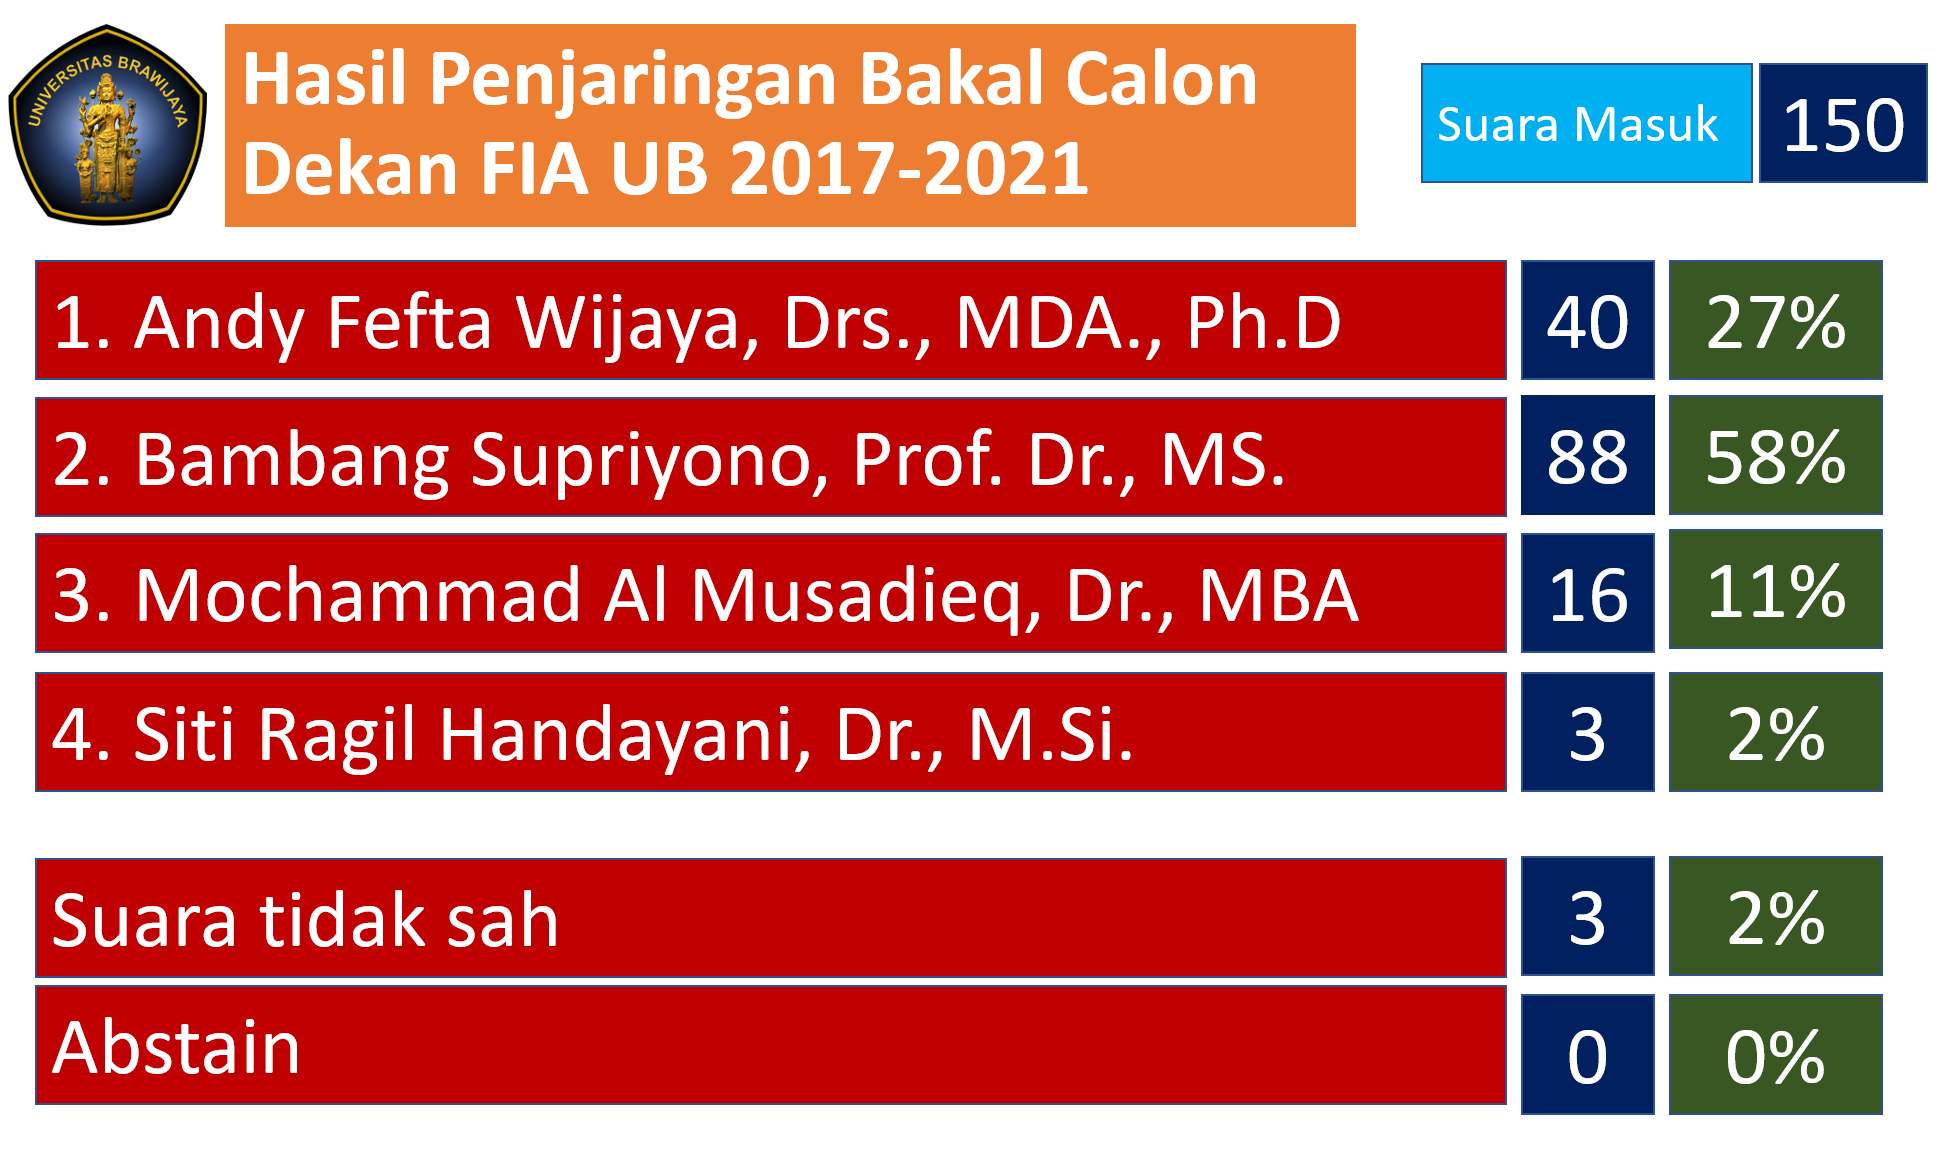 Prof Bambang Supriyono Unggul Dalam Penjaringan Bakal Calon Dekan FIA UB 2017-2021